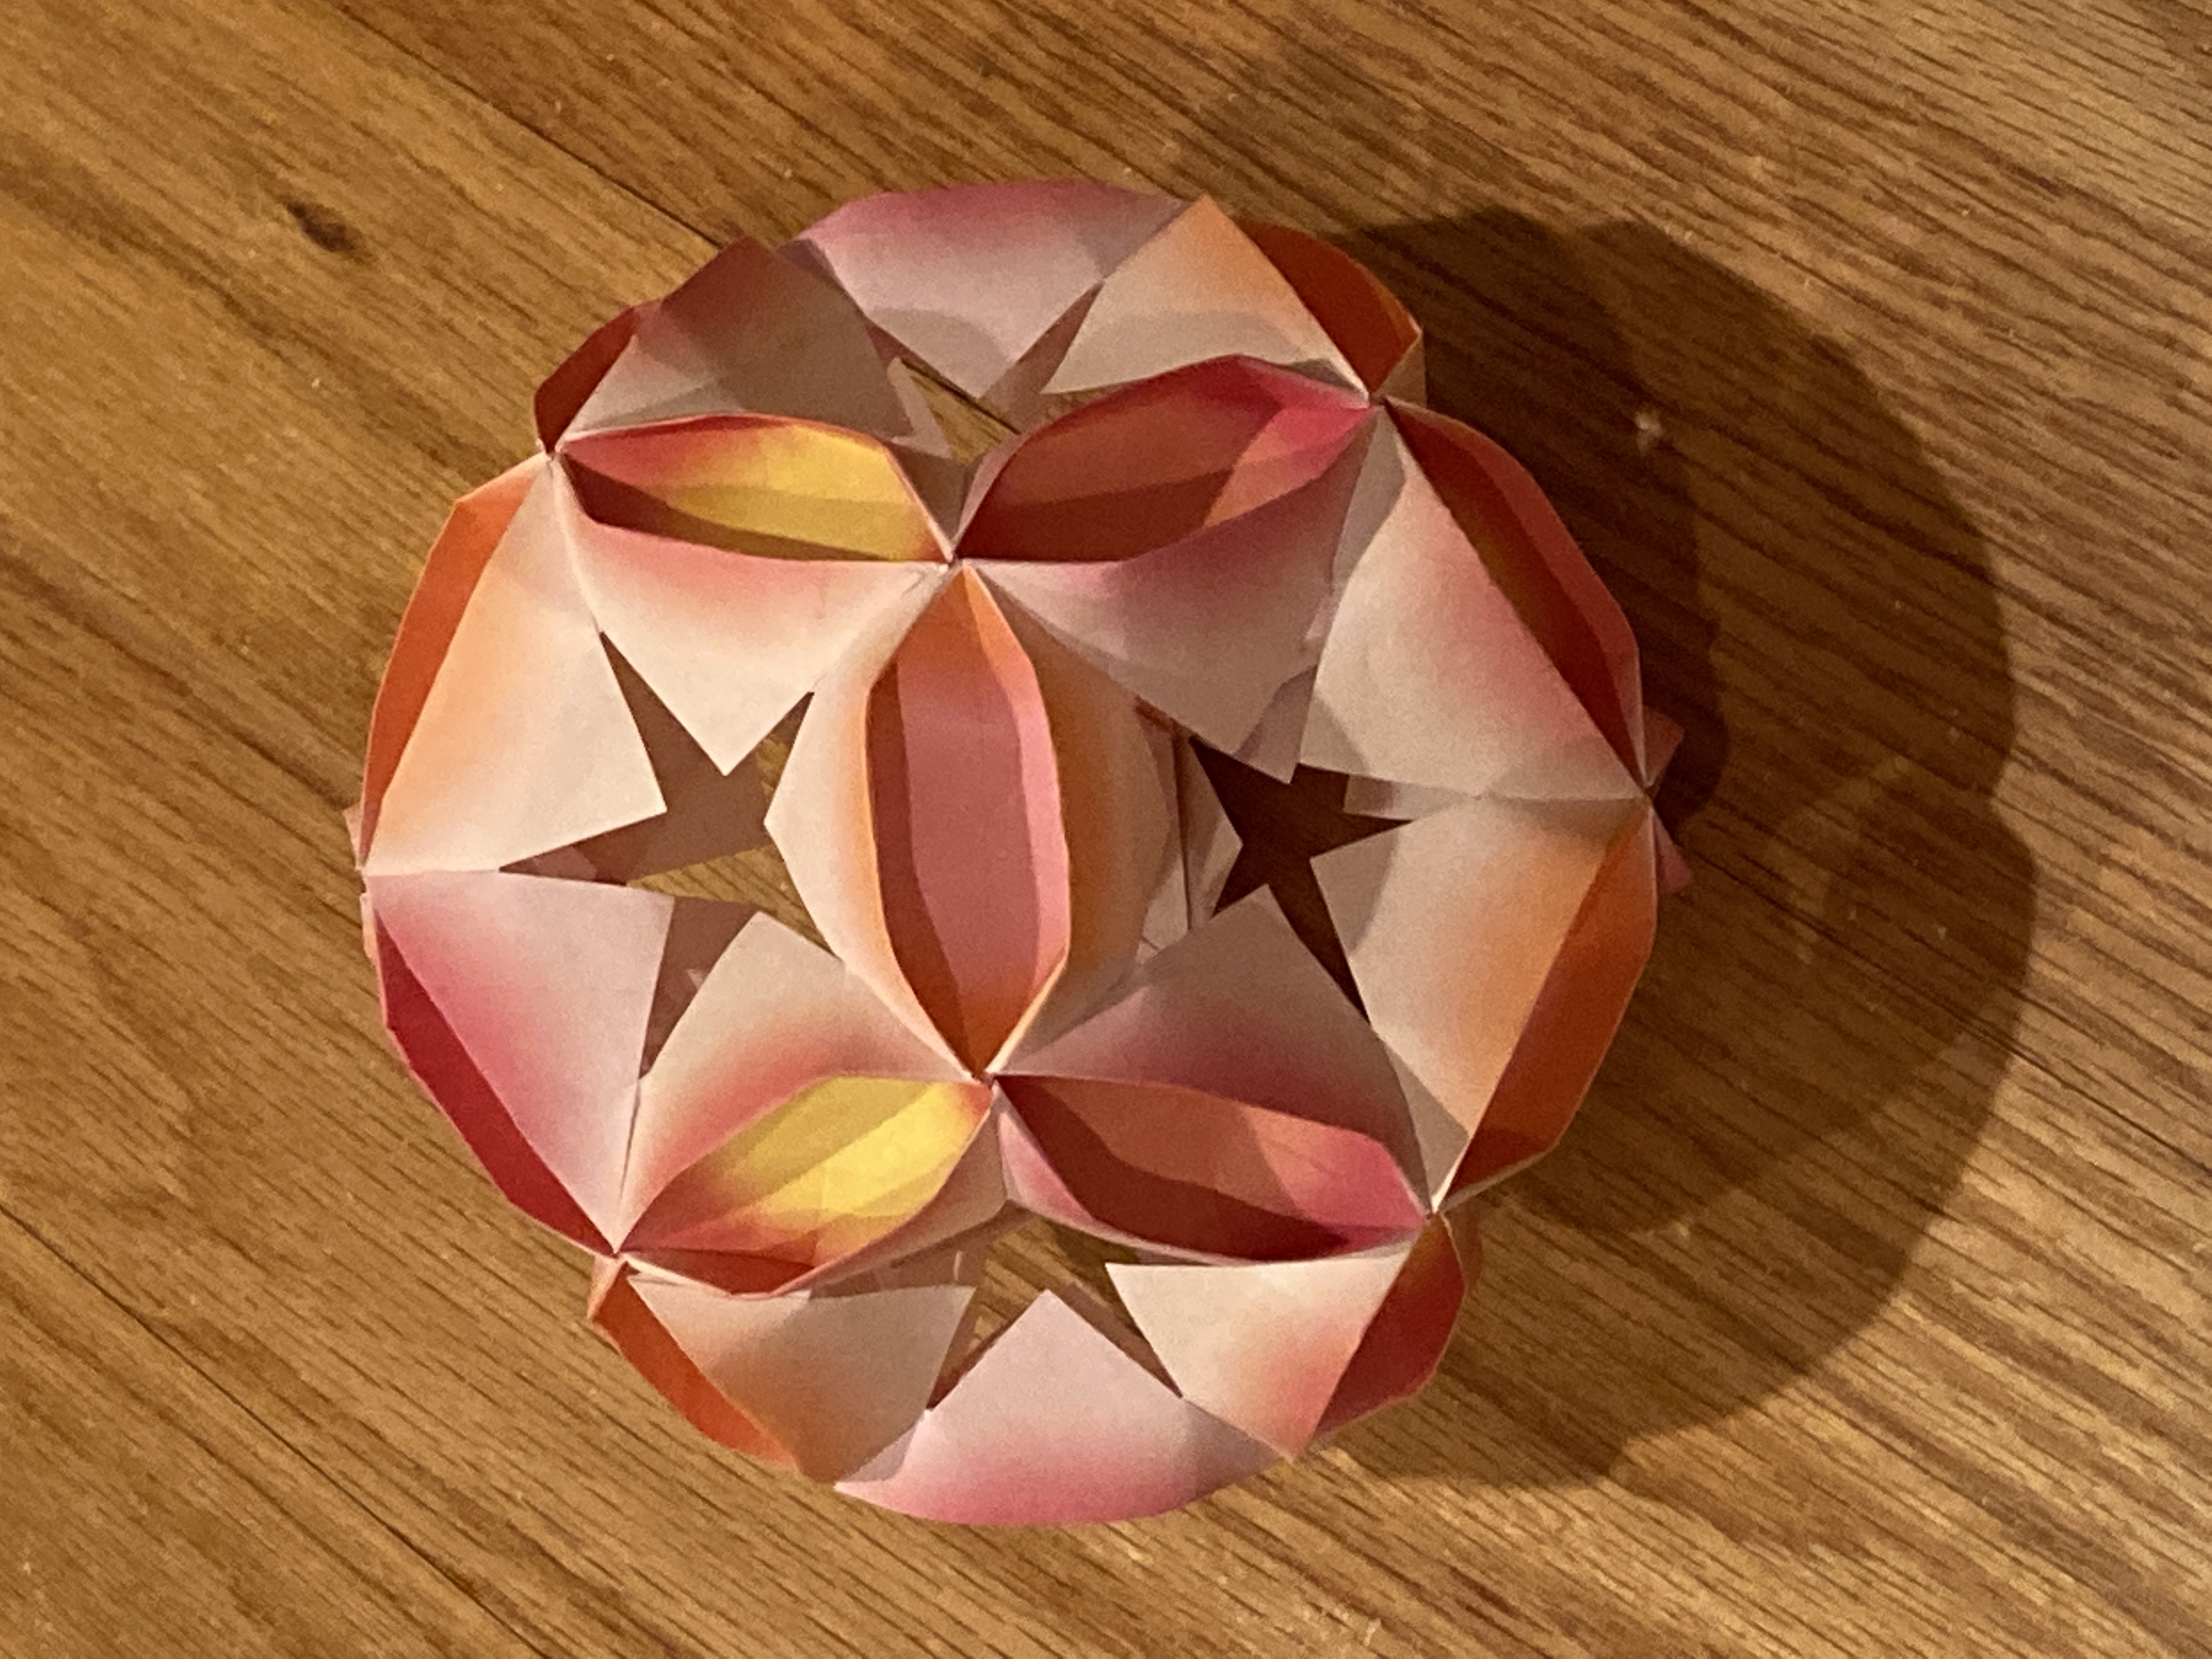 2022/05/29(Sun) 13:53「Star Orb」Janet Yelle
（創作者 Author：Miyuki Kawamura ,　製作者 Folder：Janet Yelle,　出典 Source：Origami Tanteidan 19th Convention Book ）
 Made from thirty squares of Harmony paper